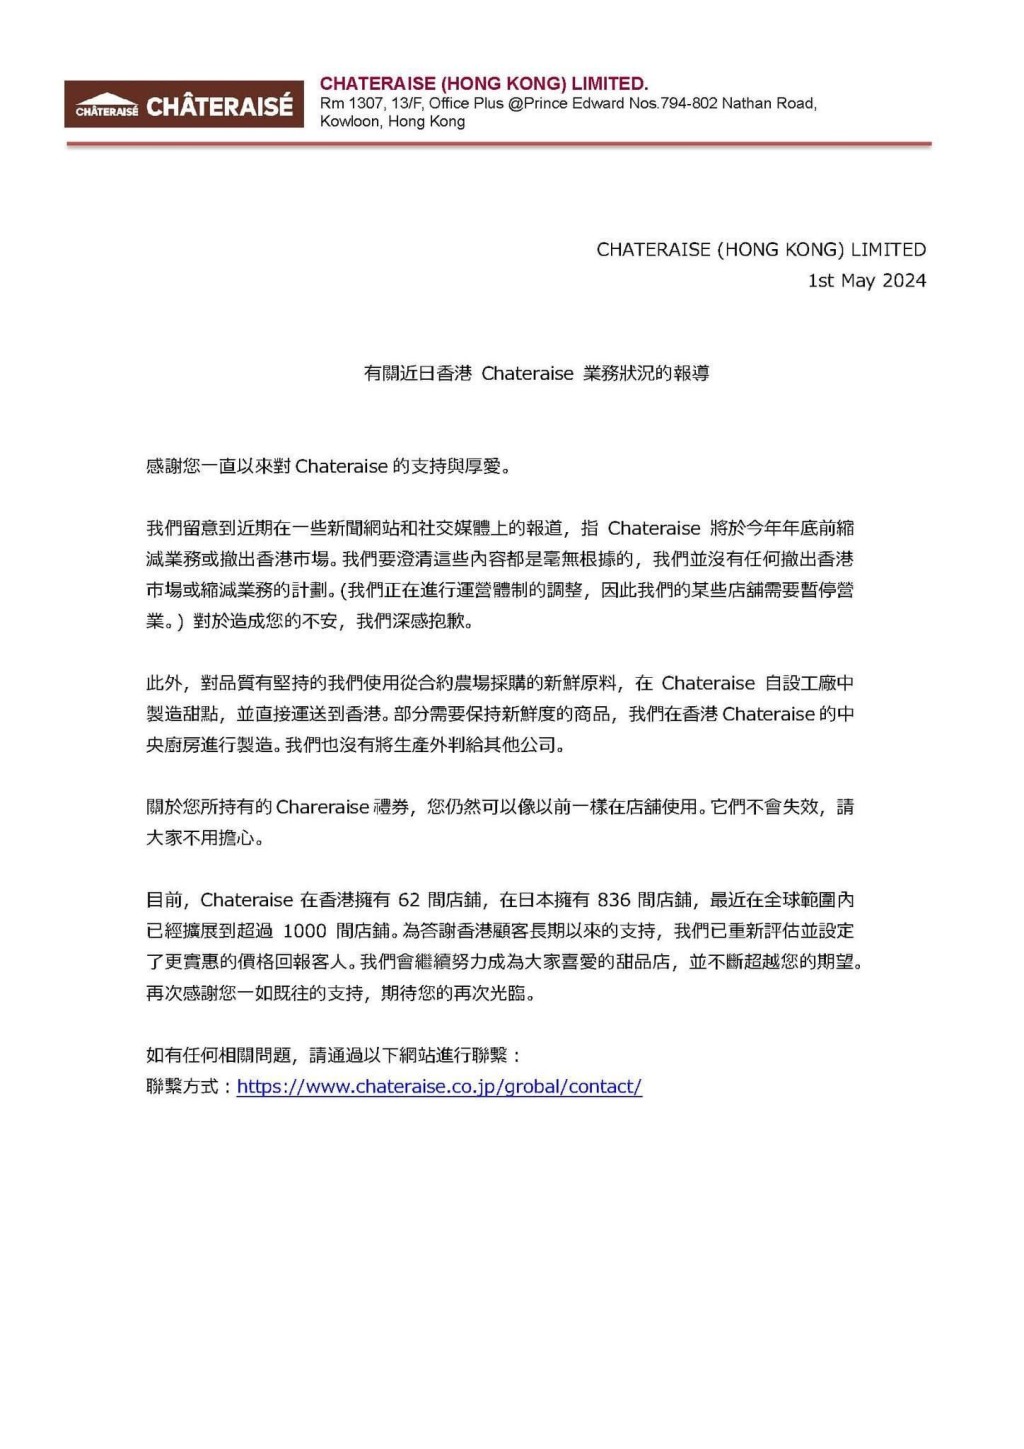 Chateraise公告指，縮減業務或撤出香港市場的報道毫無根據。